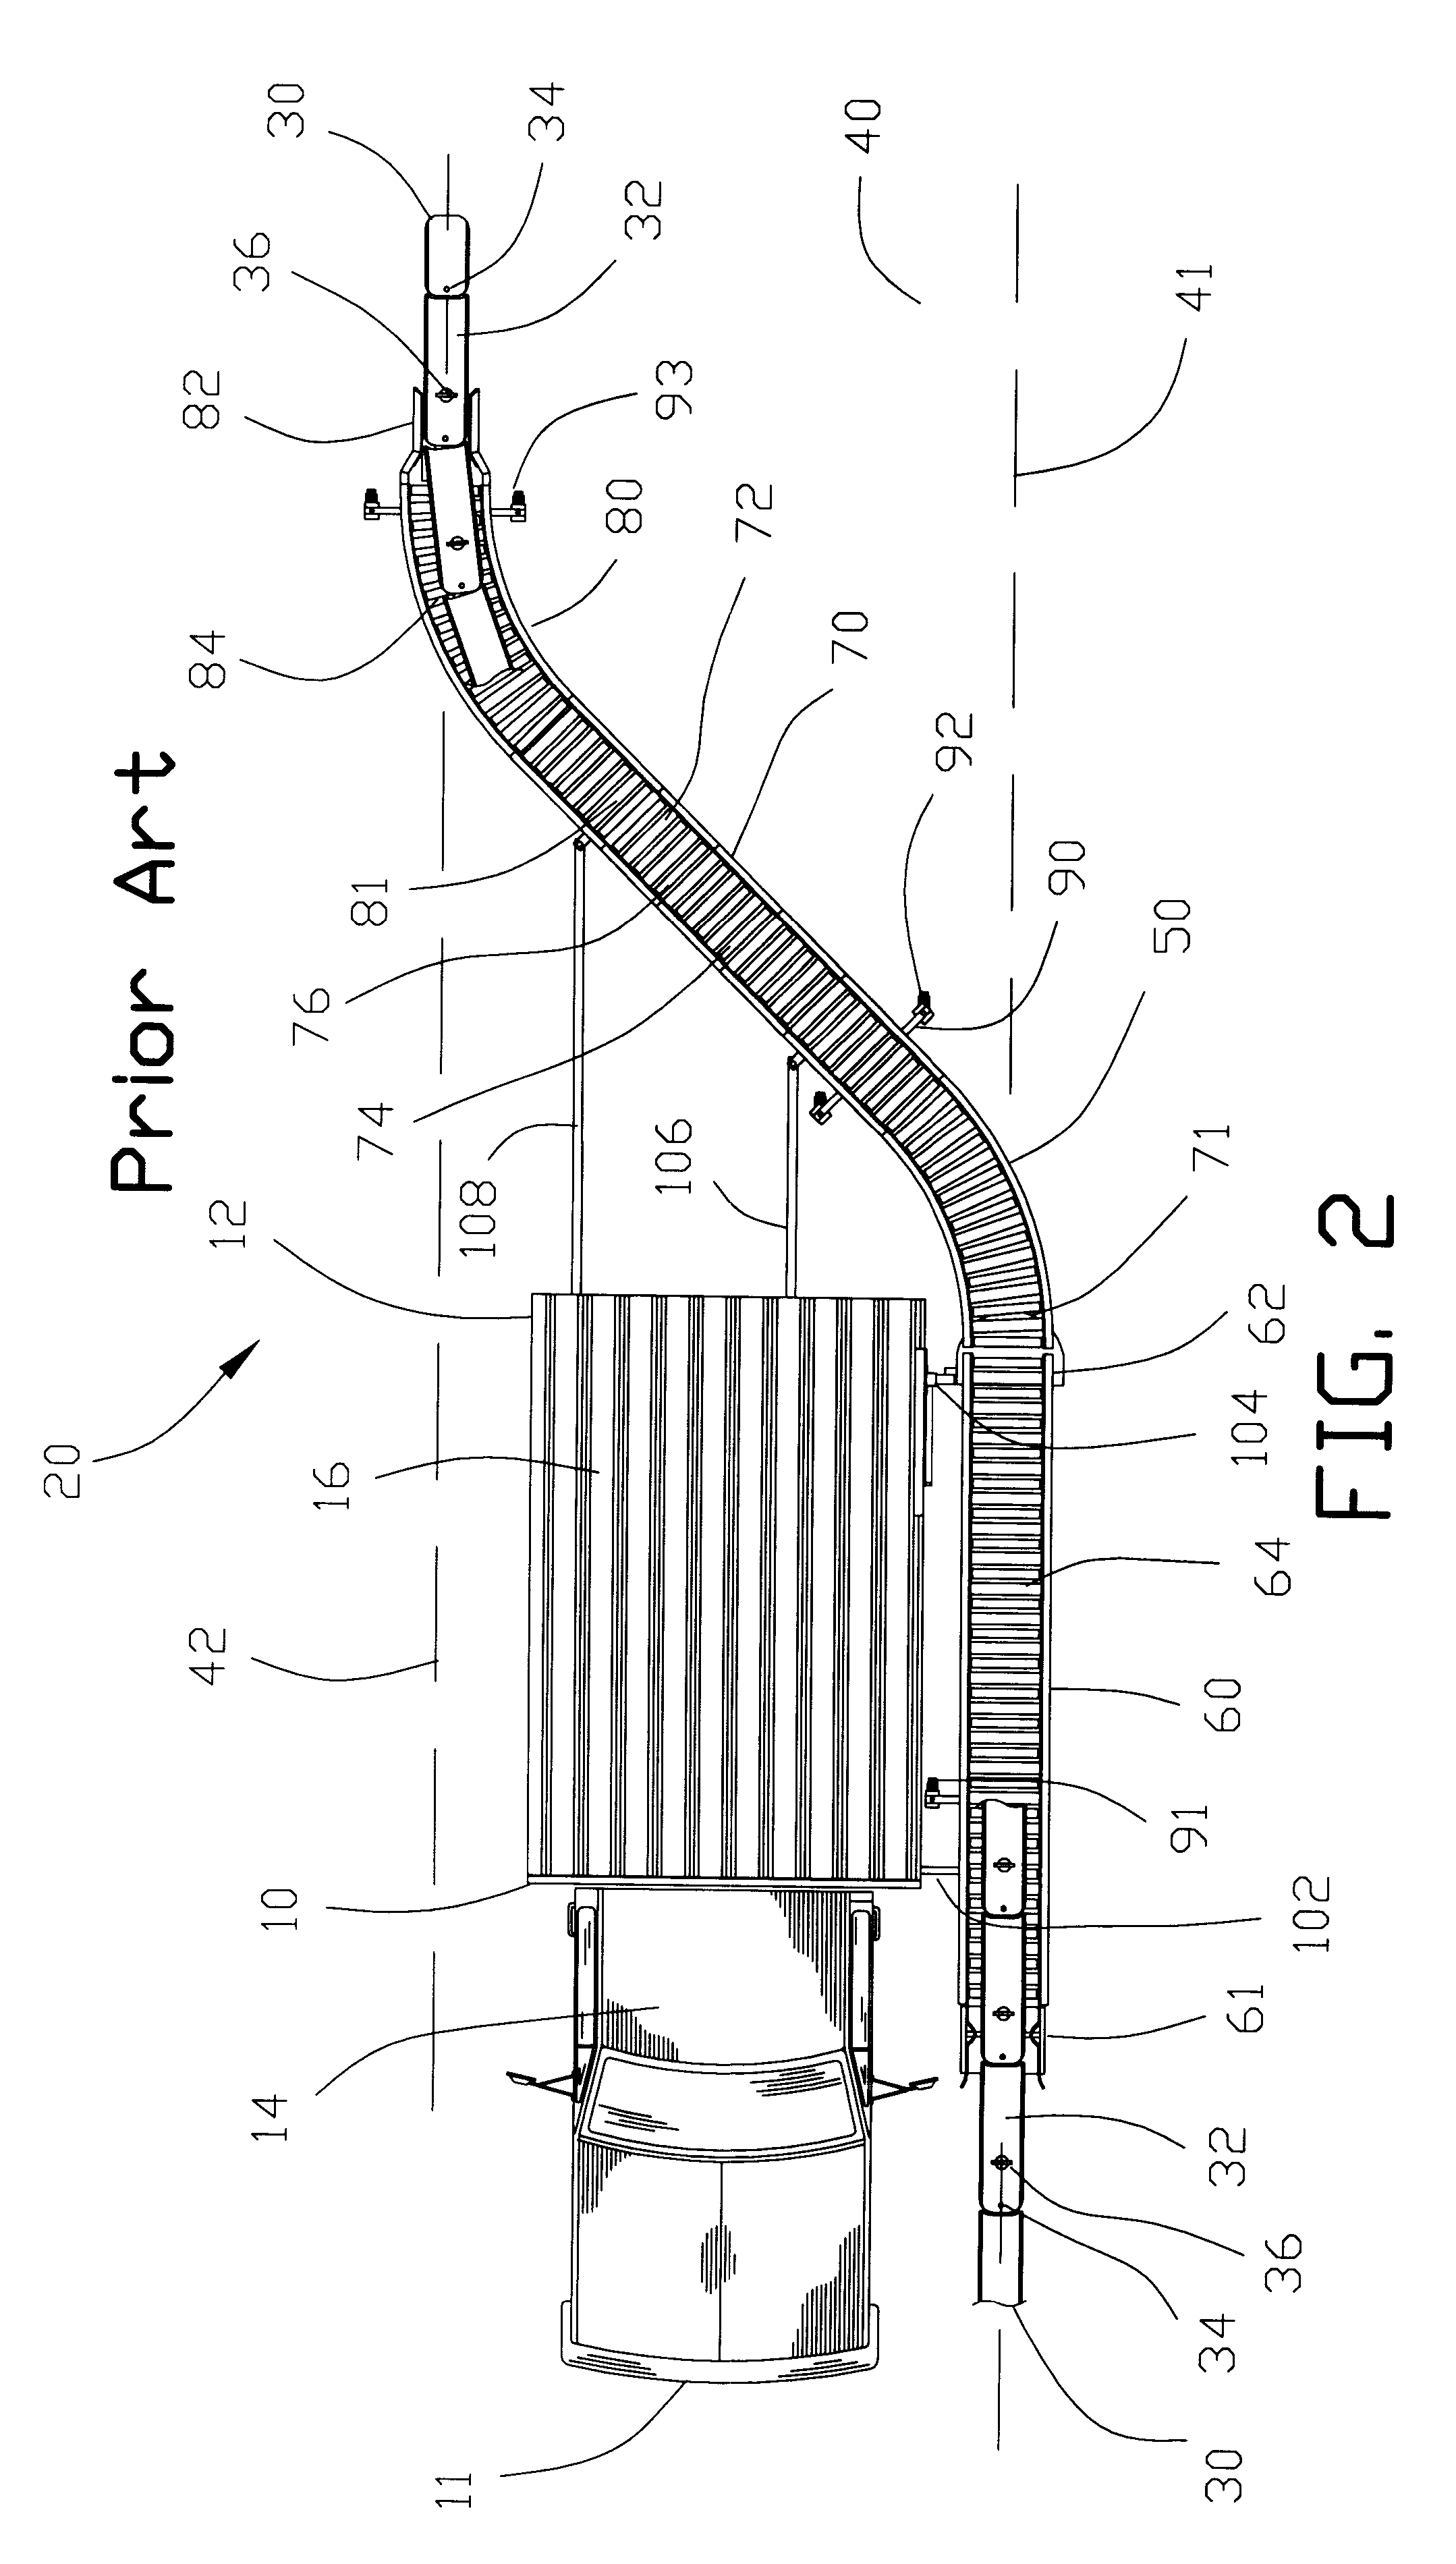 Apparatus for translocating lane divider